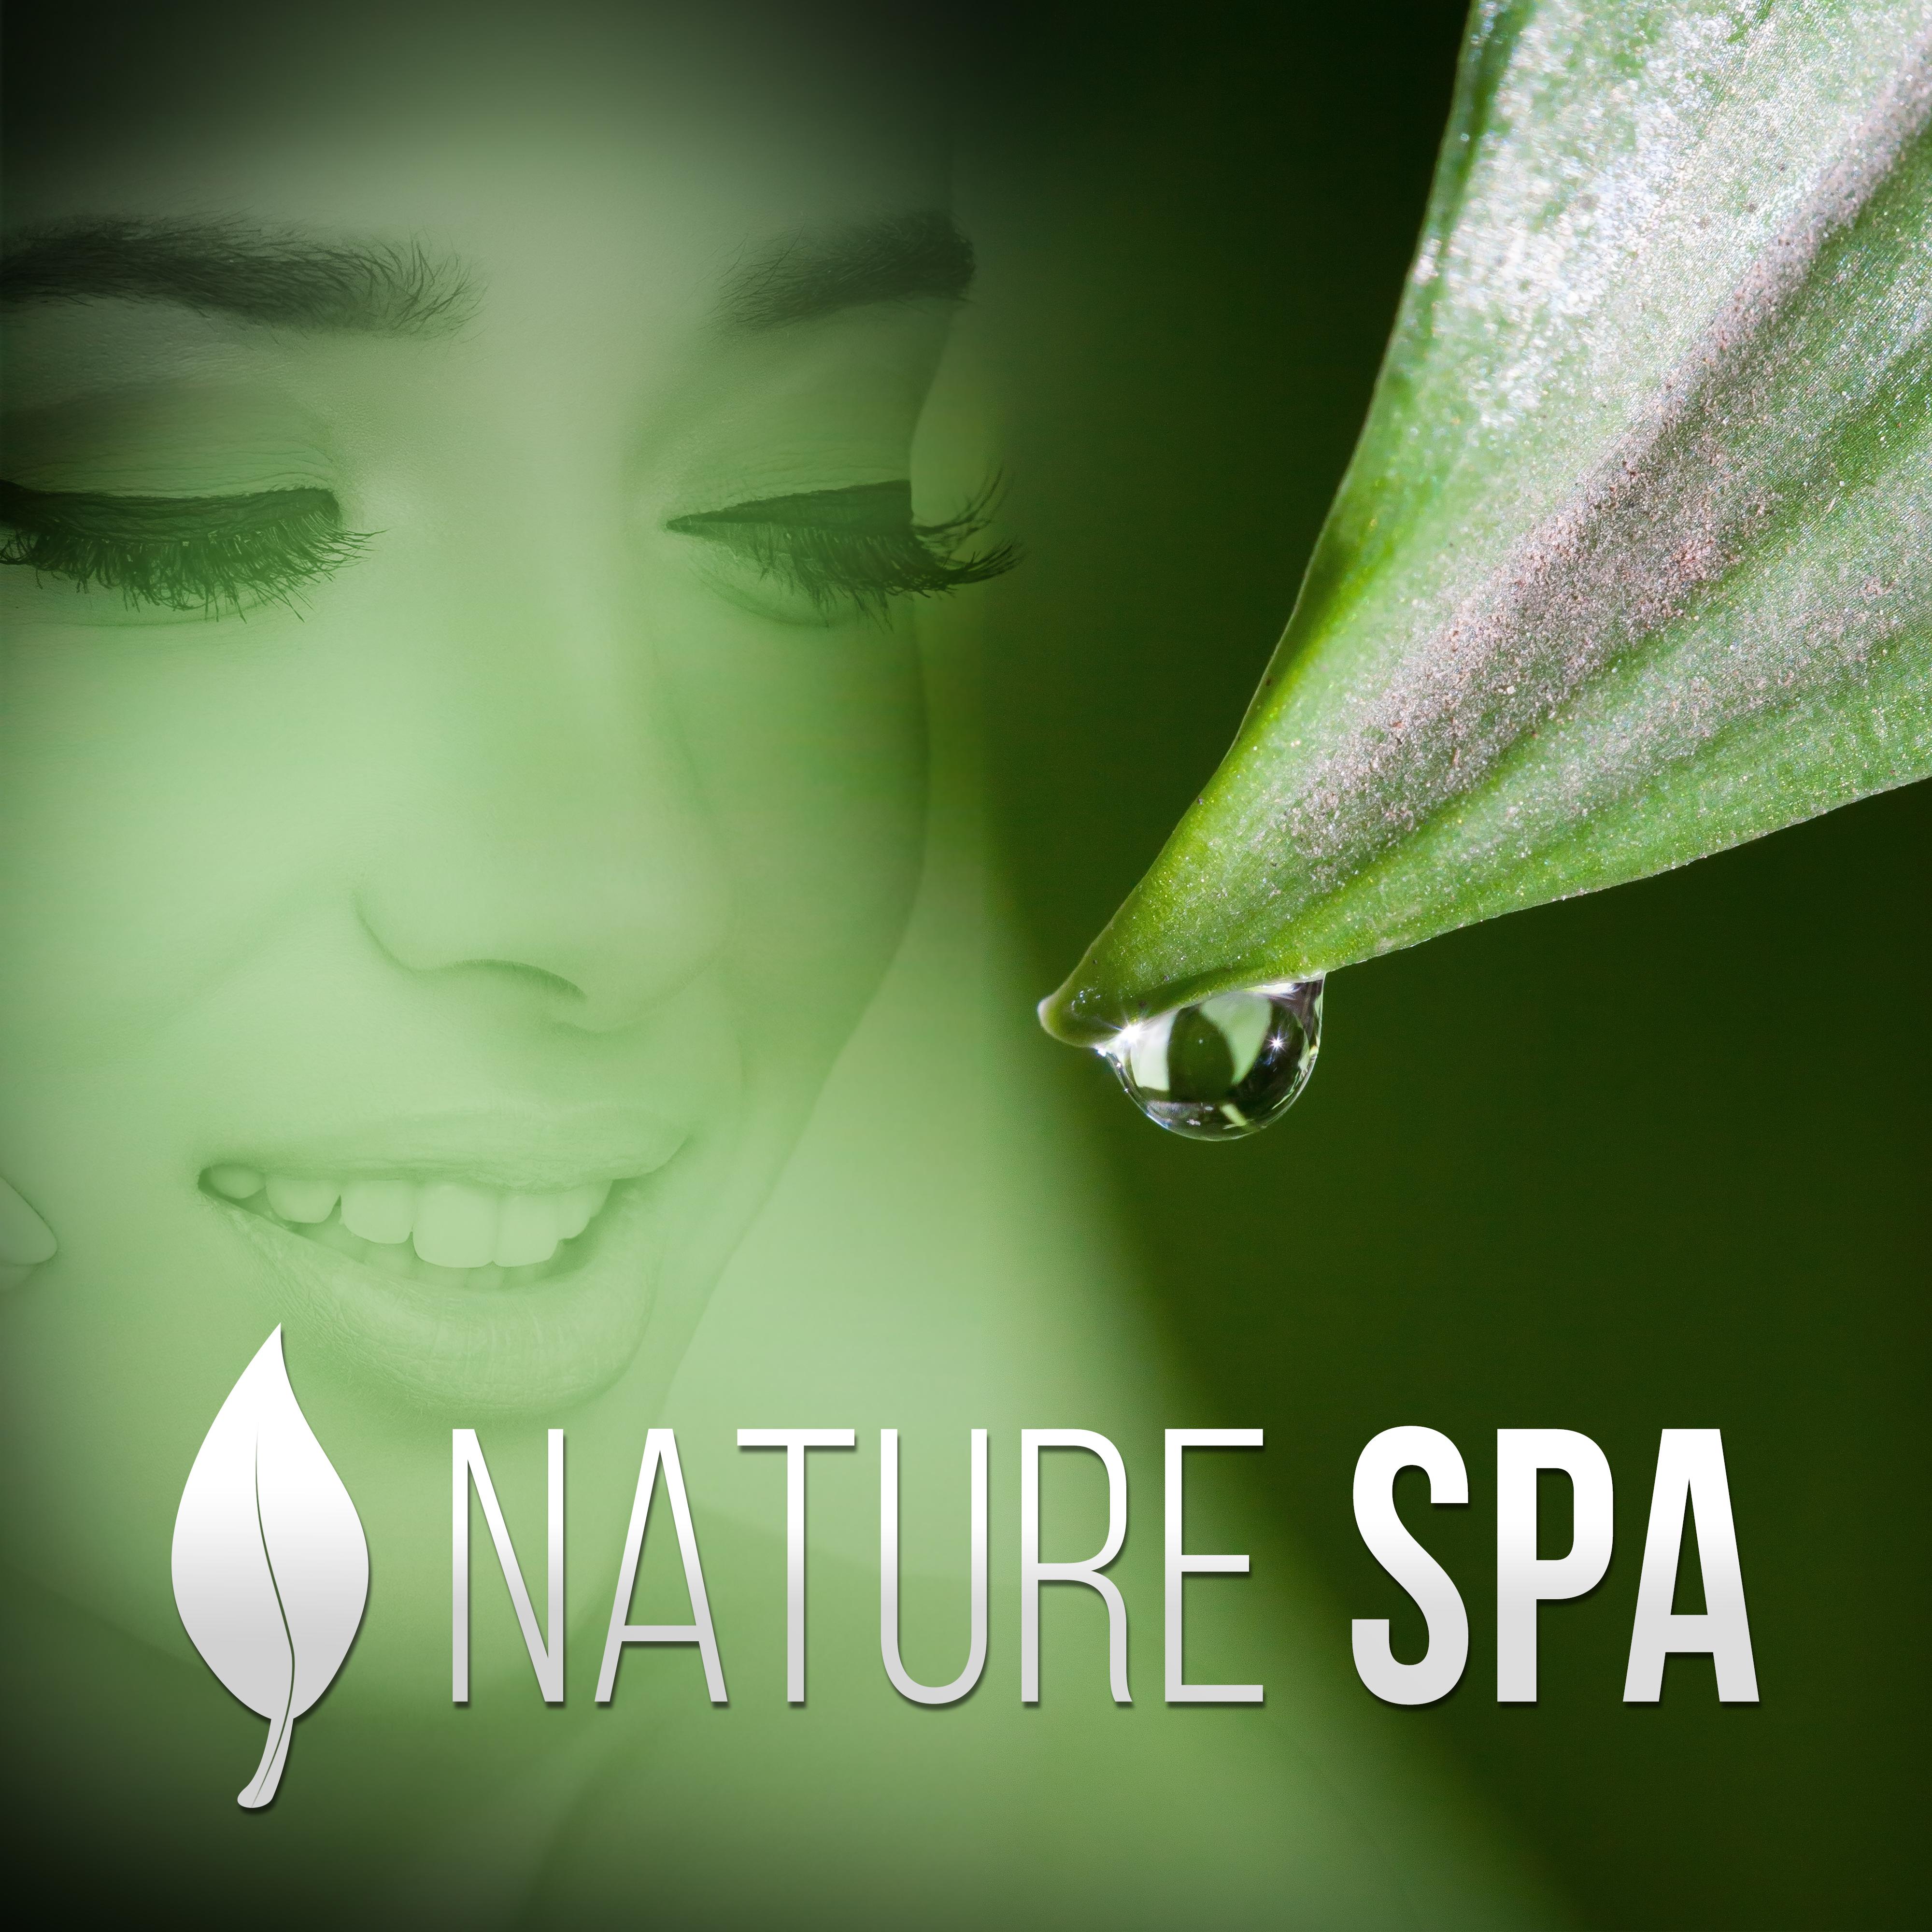 Nature Spa  Relaxing Music for Spa, Massage, Wellness, Beauty Center, Calming Sounds of Nature, Pure Massage, Deep Relax